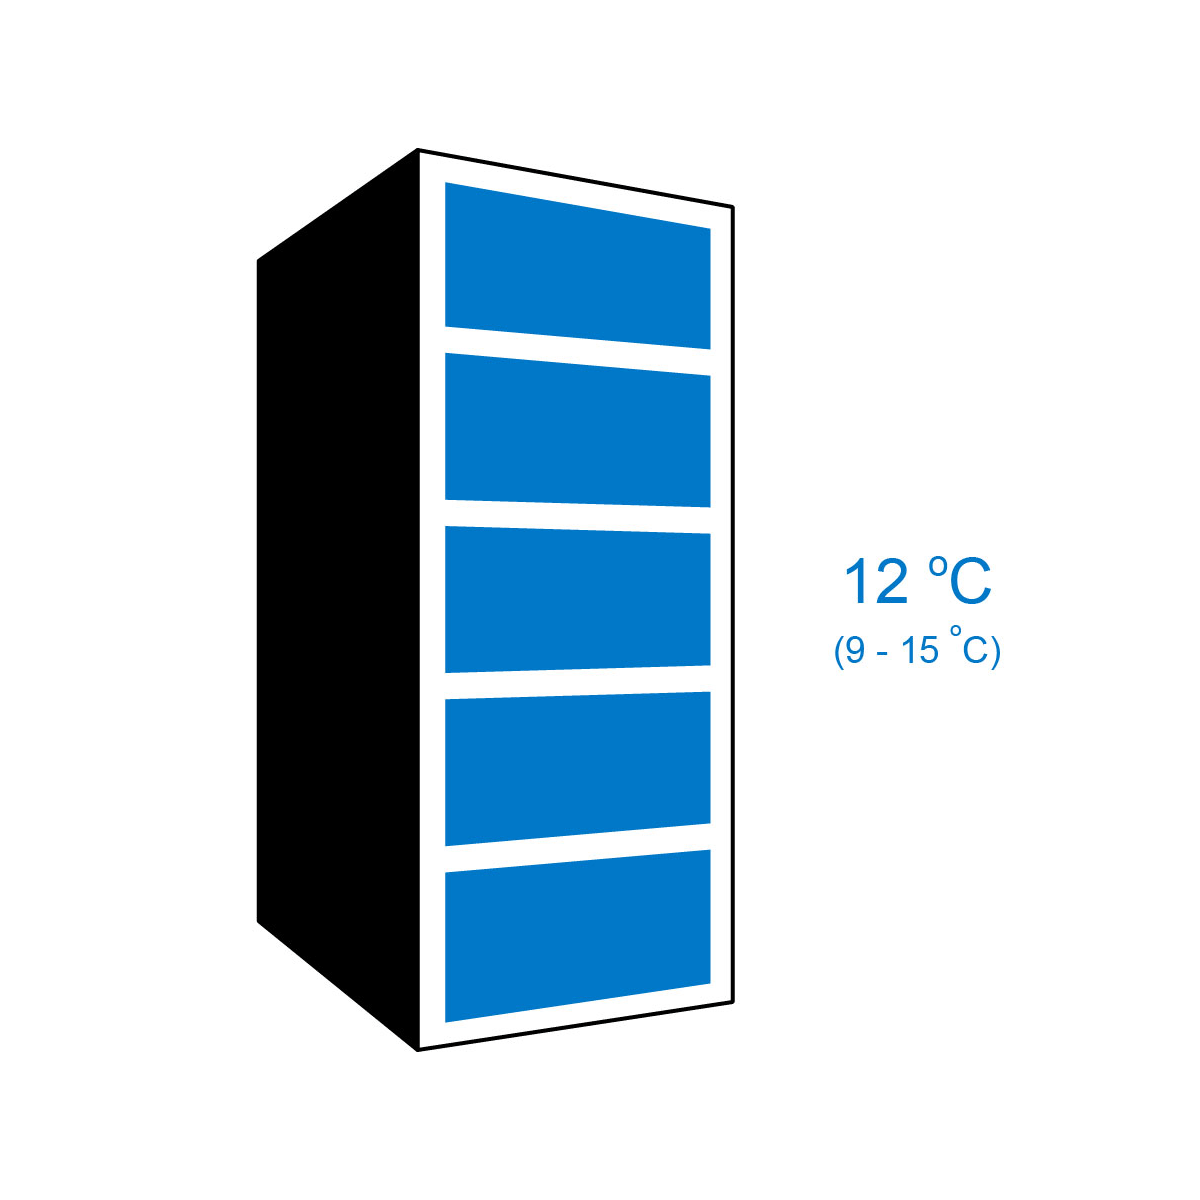 【Eurocave】V-059V3 Maturing 1 temperature wine cabinet Compact, Small model